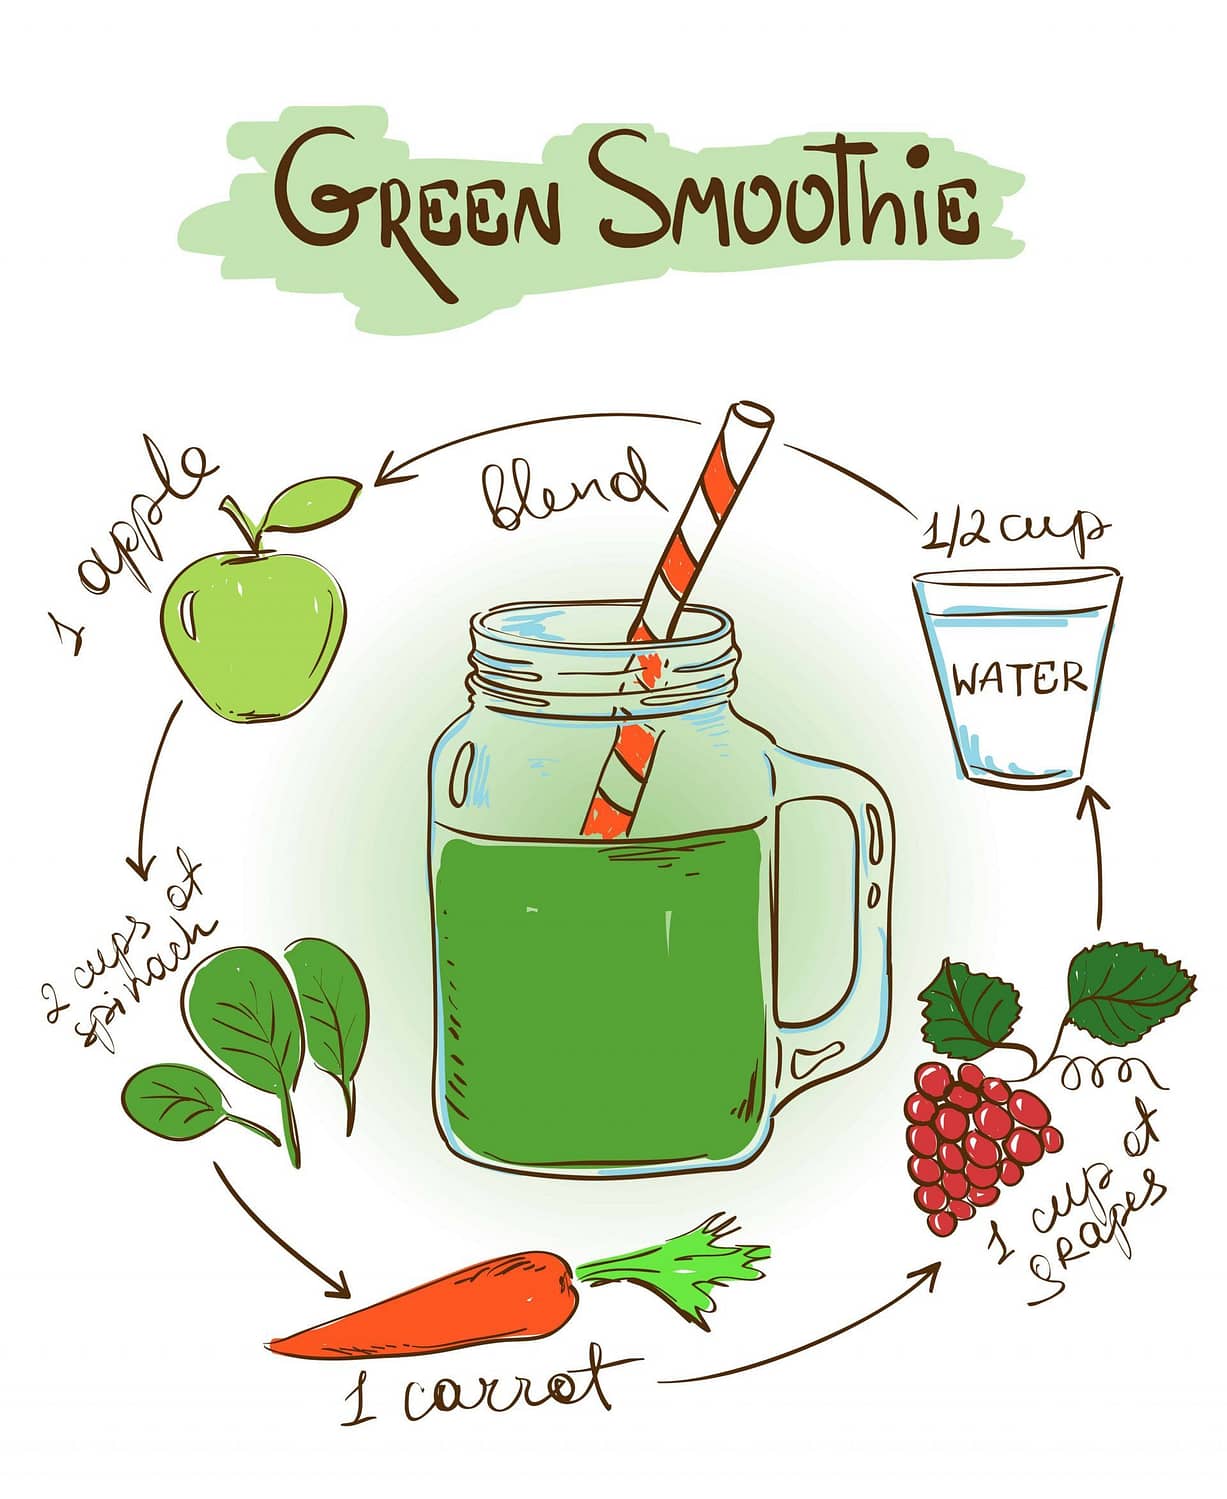 Green Smoothie Recipe Hand drawn sketch illustration